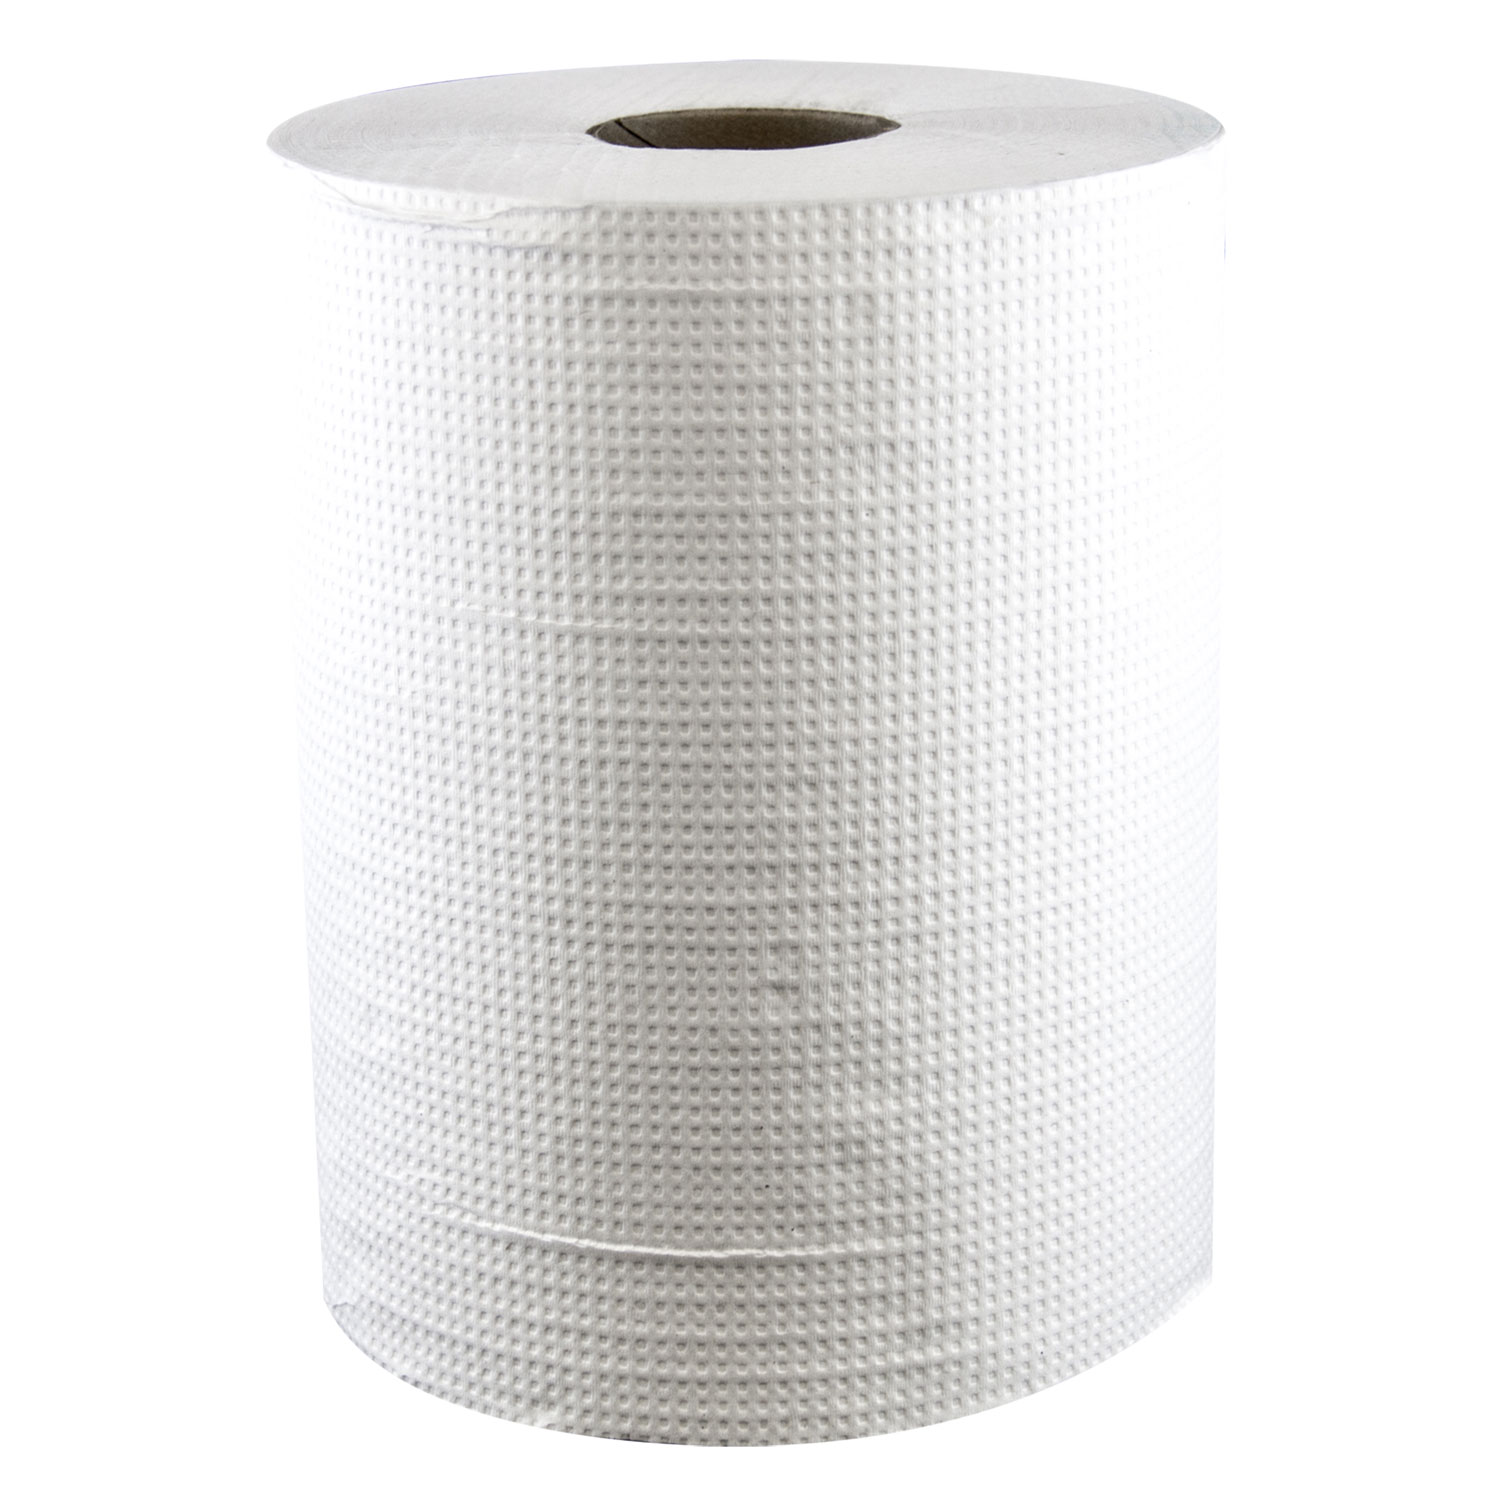  Morcon Tissue MOR W12600 Morsoft Universal Roll Towels, Paper, White, 7.8 x 600 ft, 12 Rolls/Carton (MORW12600) 